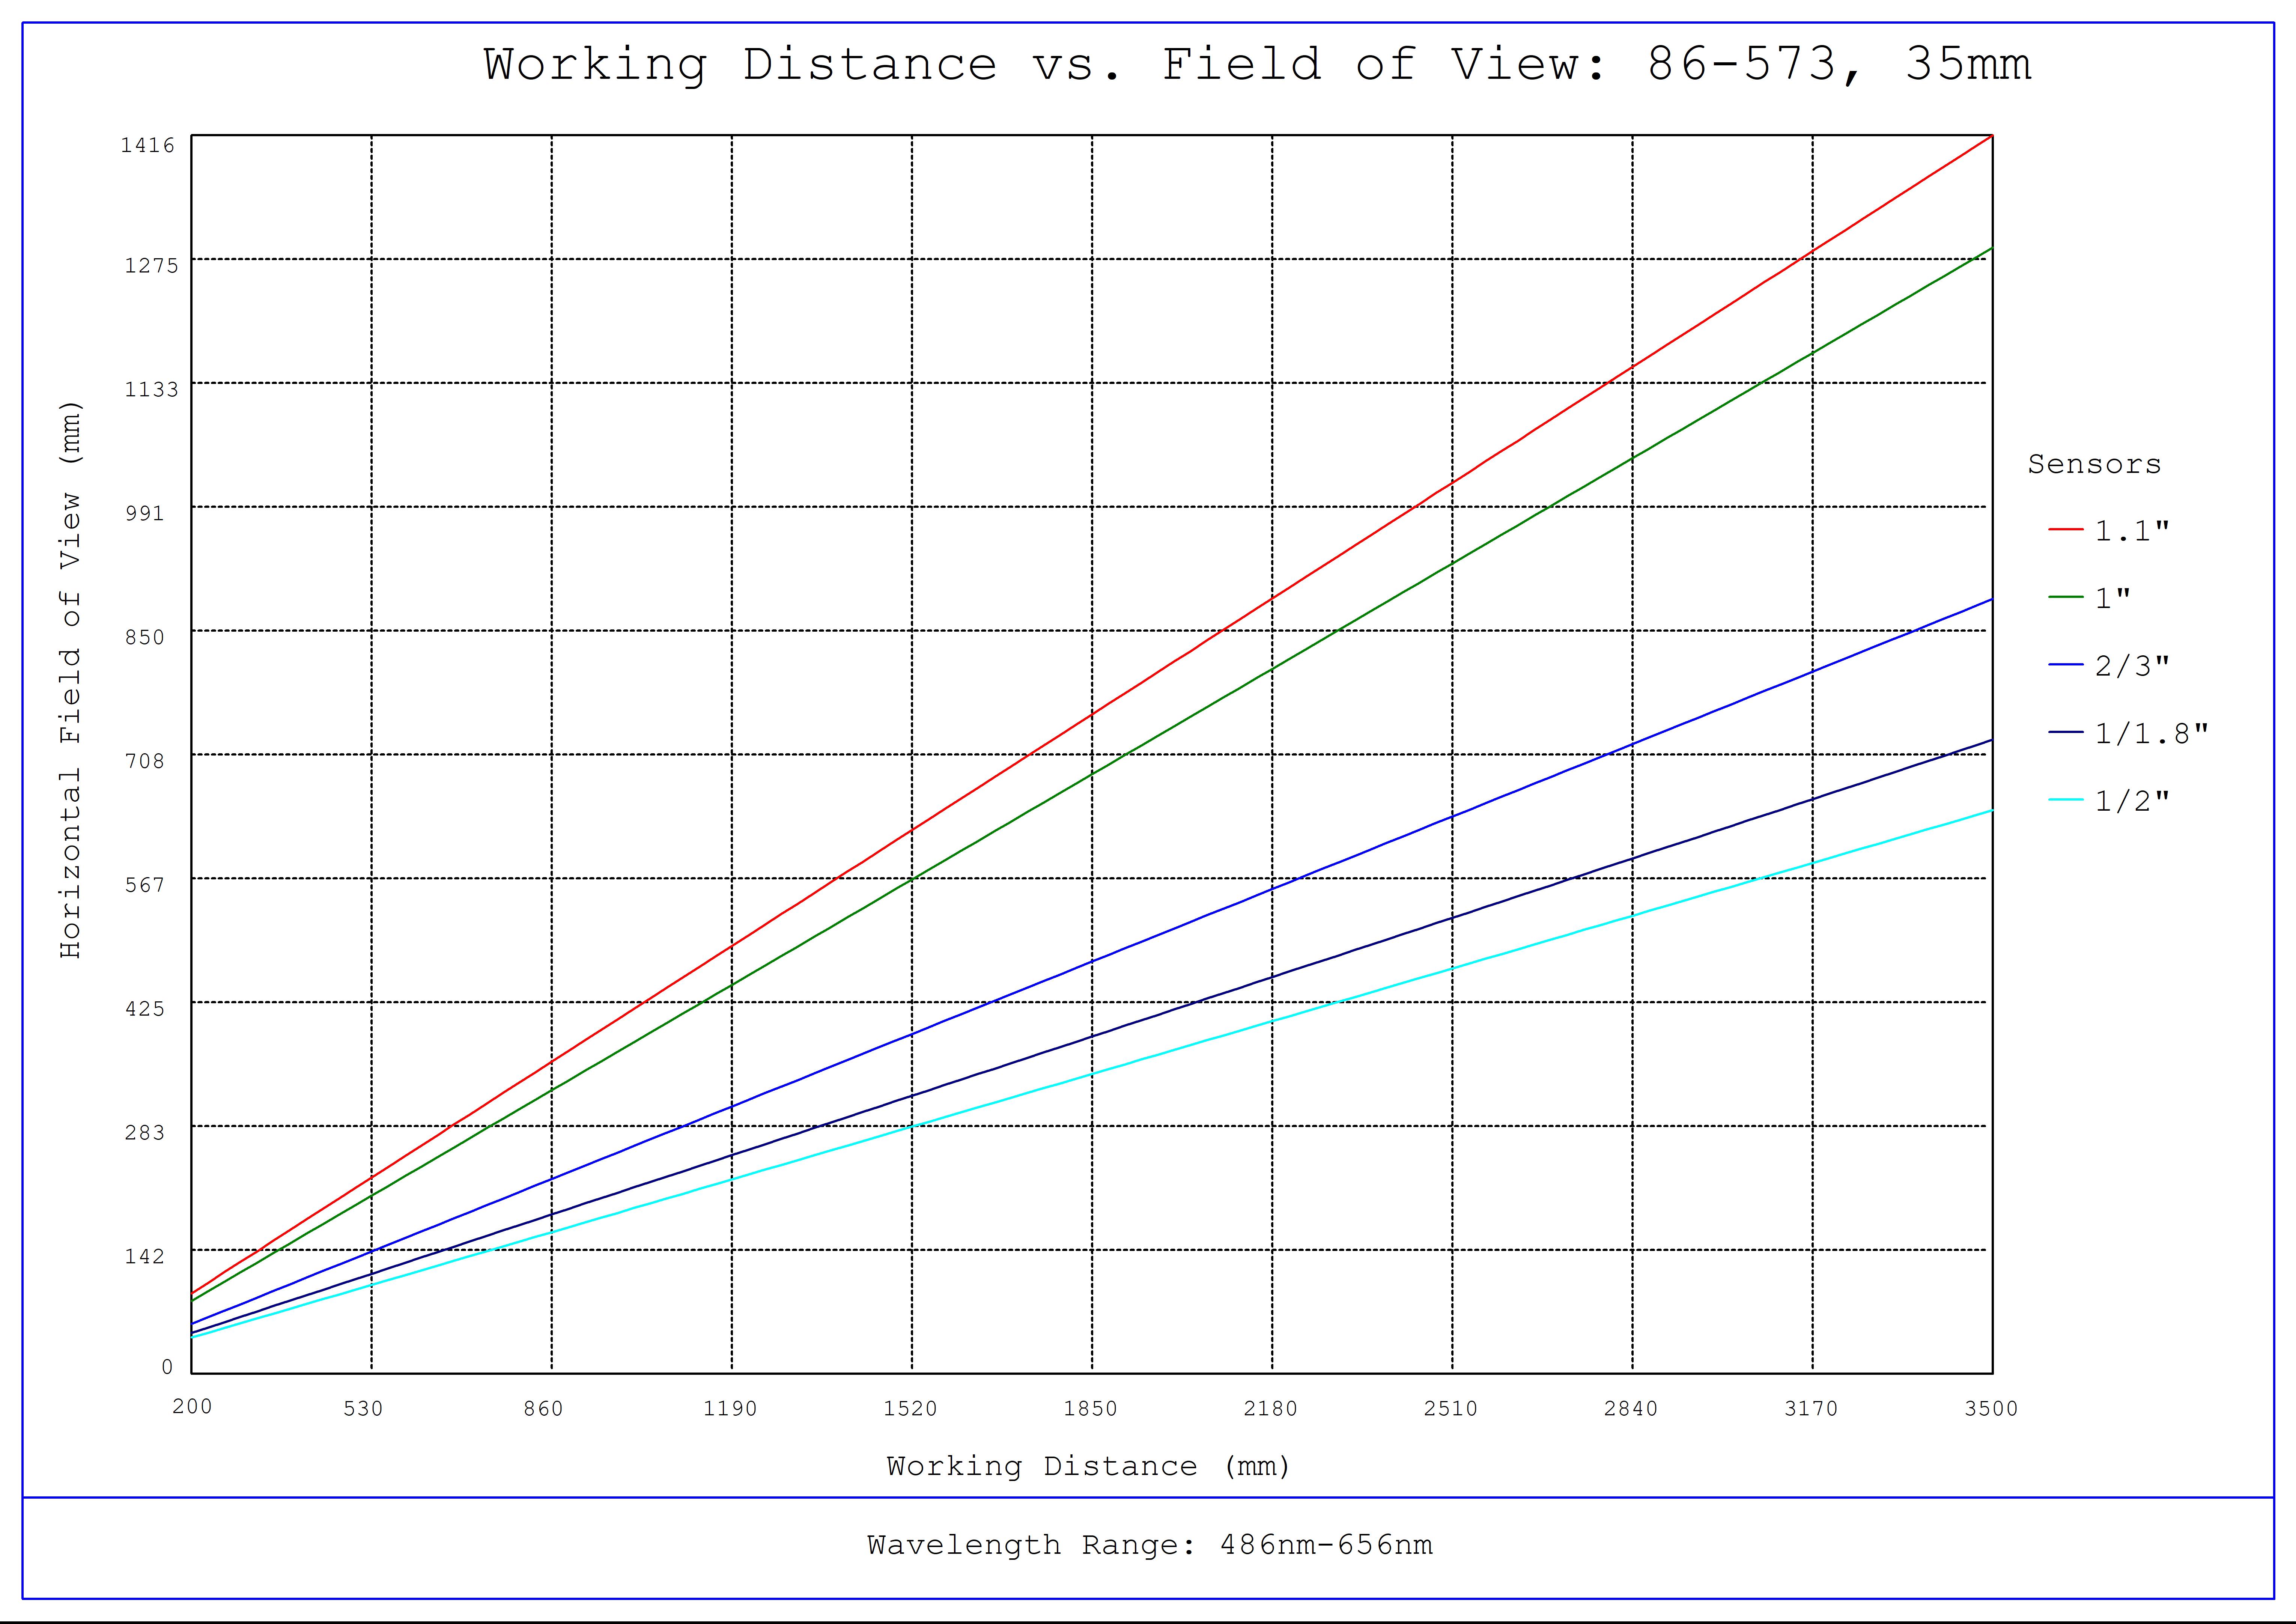 #86-573, 35mm Focal Length, HP Series Fixed Focal Length Lens, Working Distance versus Field of View Plot